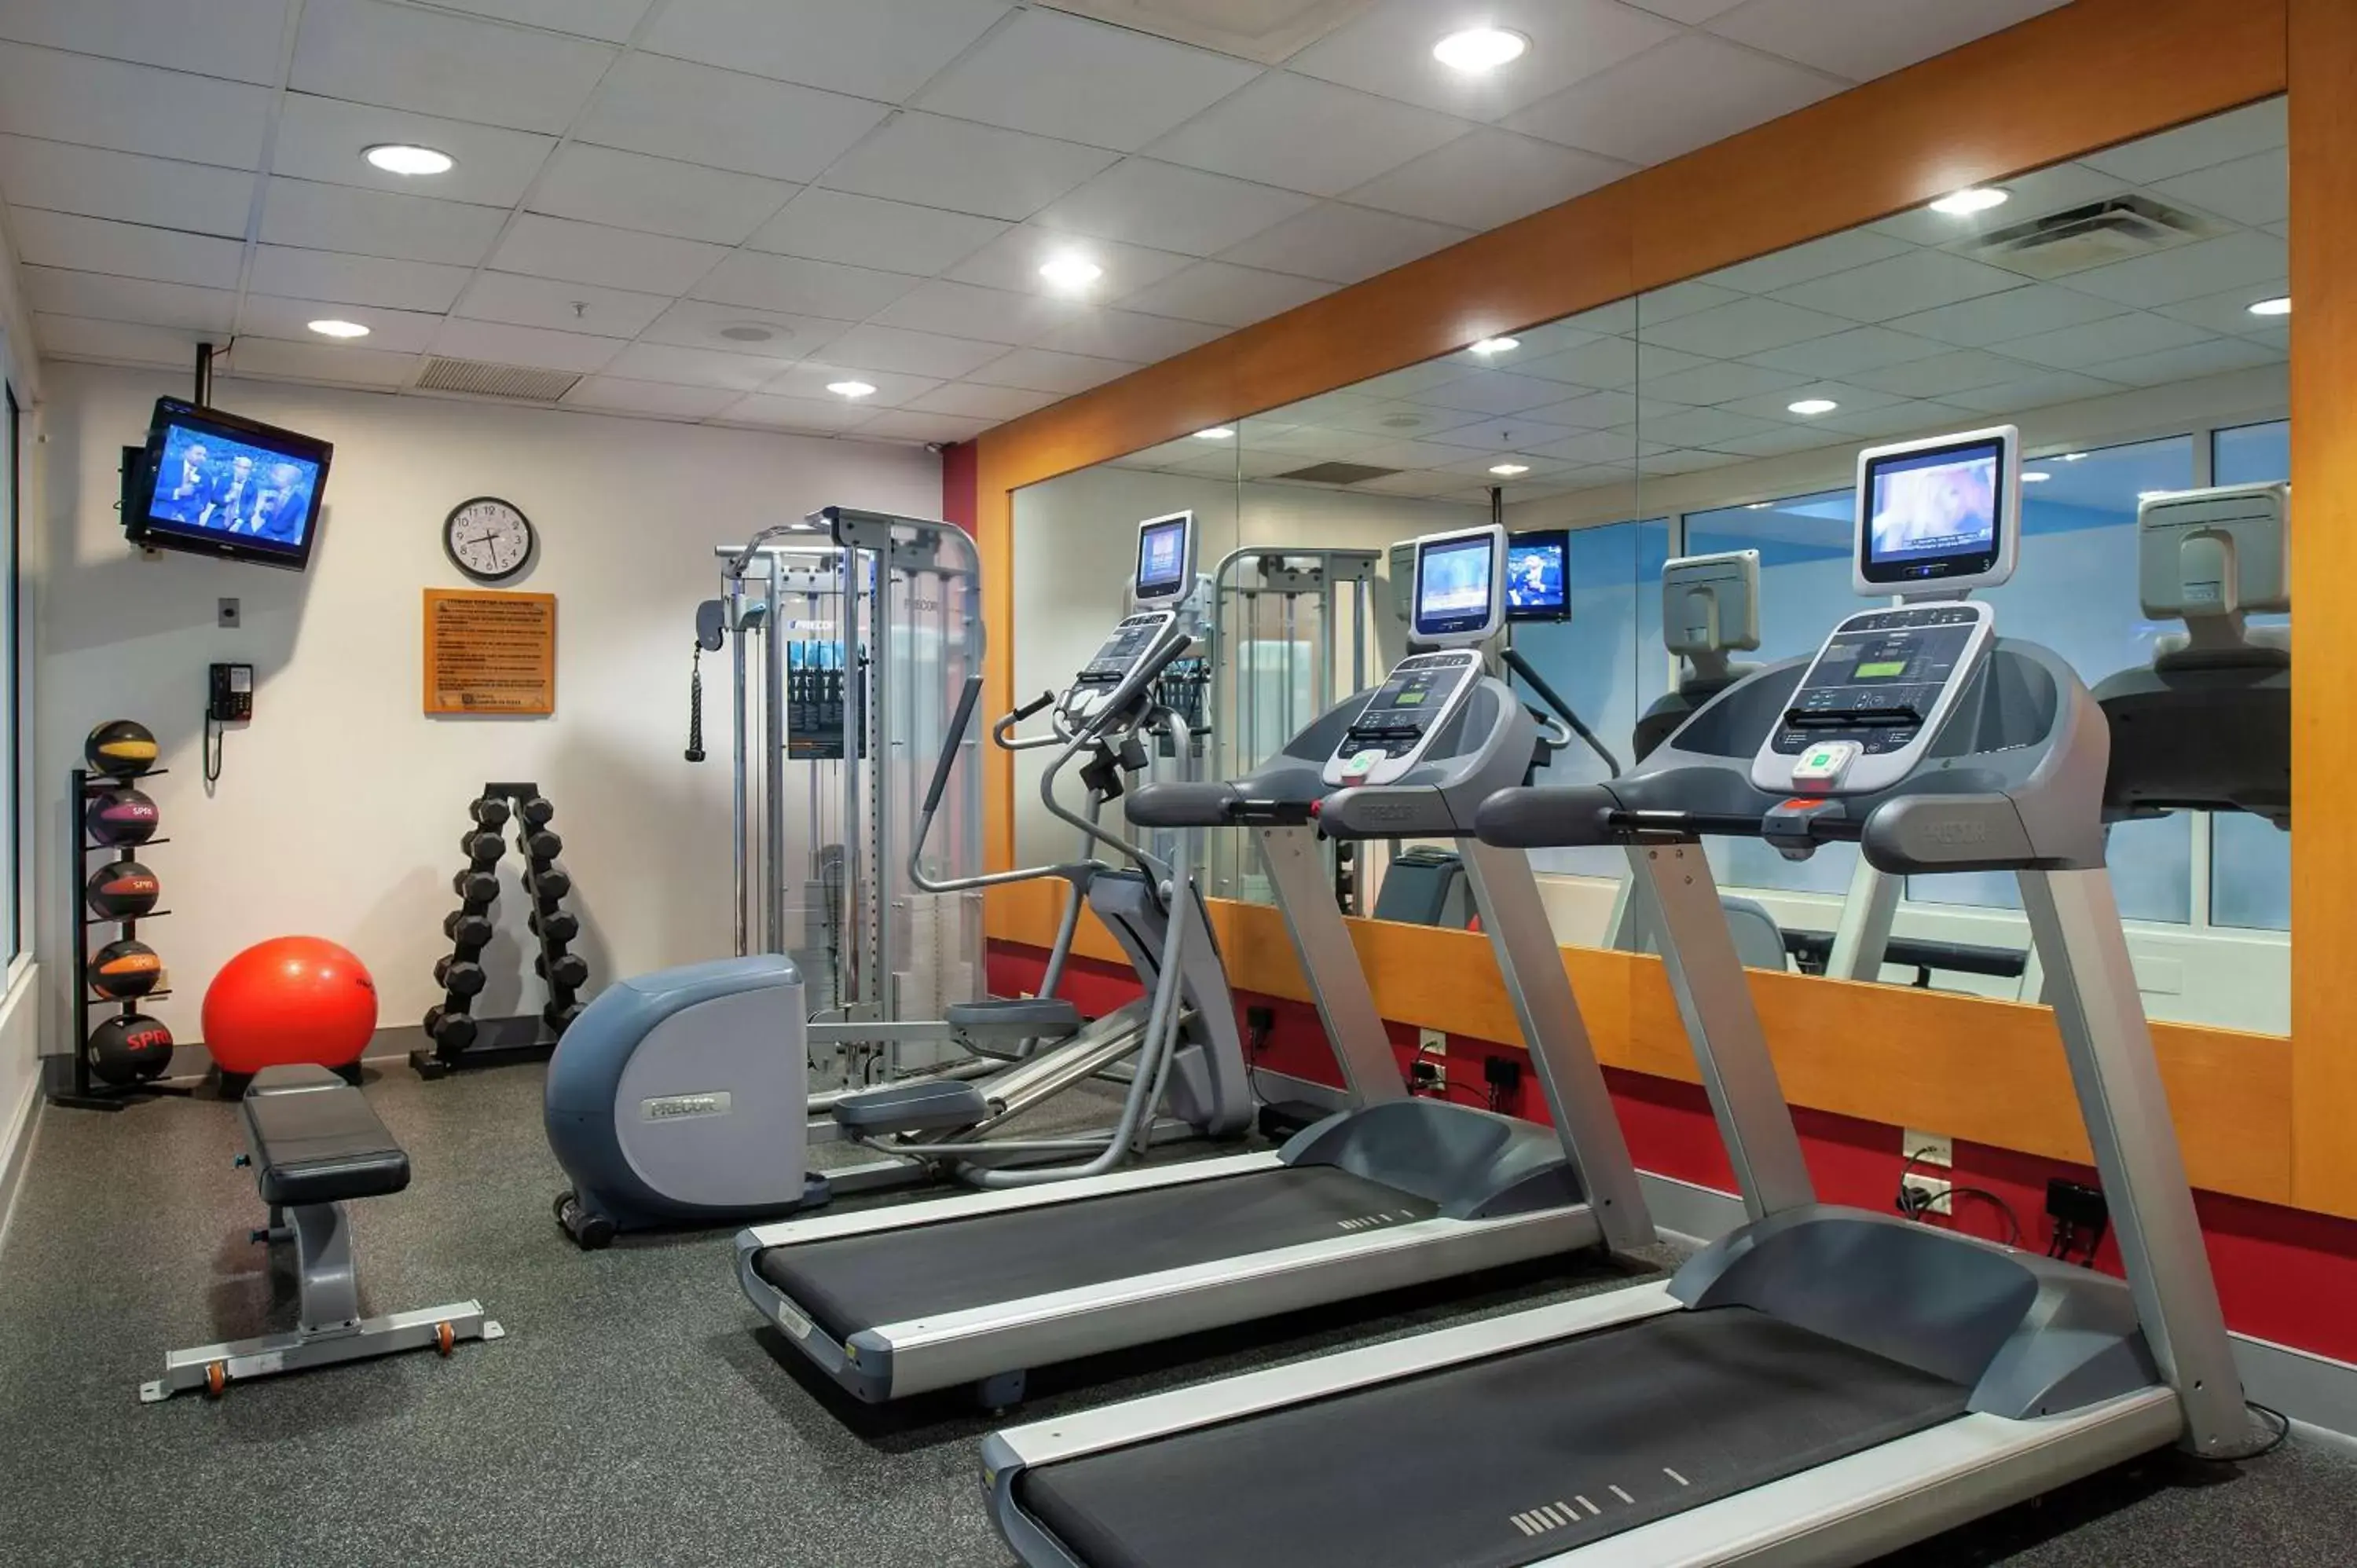 Fitness centre/facilities, Fitness Center/Facilities in Hilton Garden Inn Allentown Bethlehem Airport